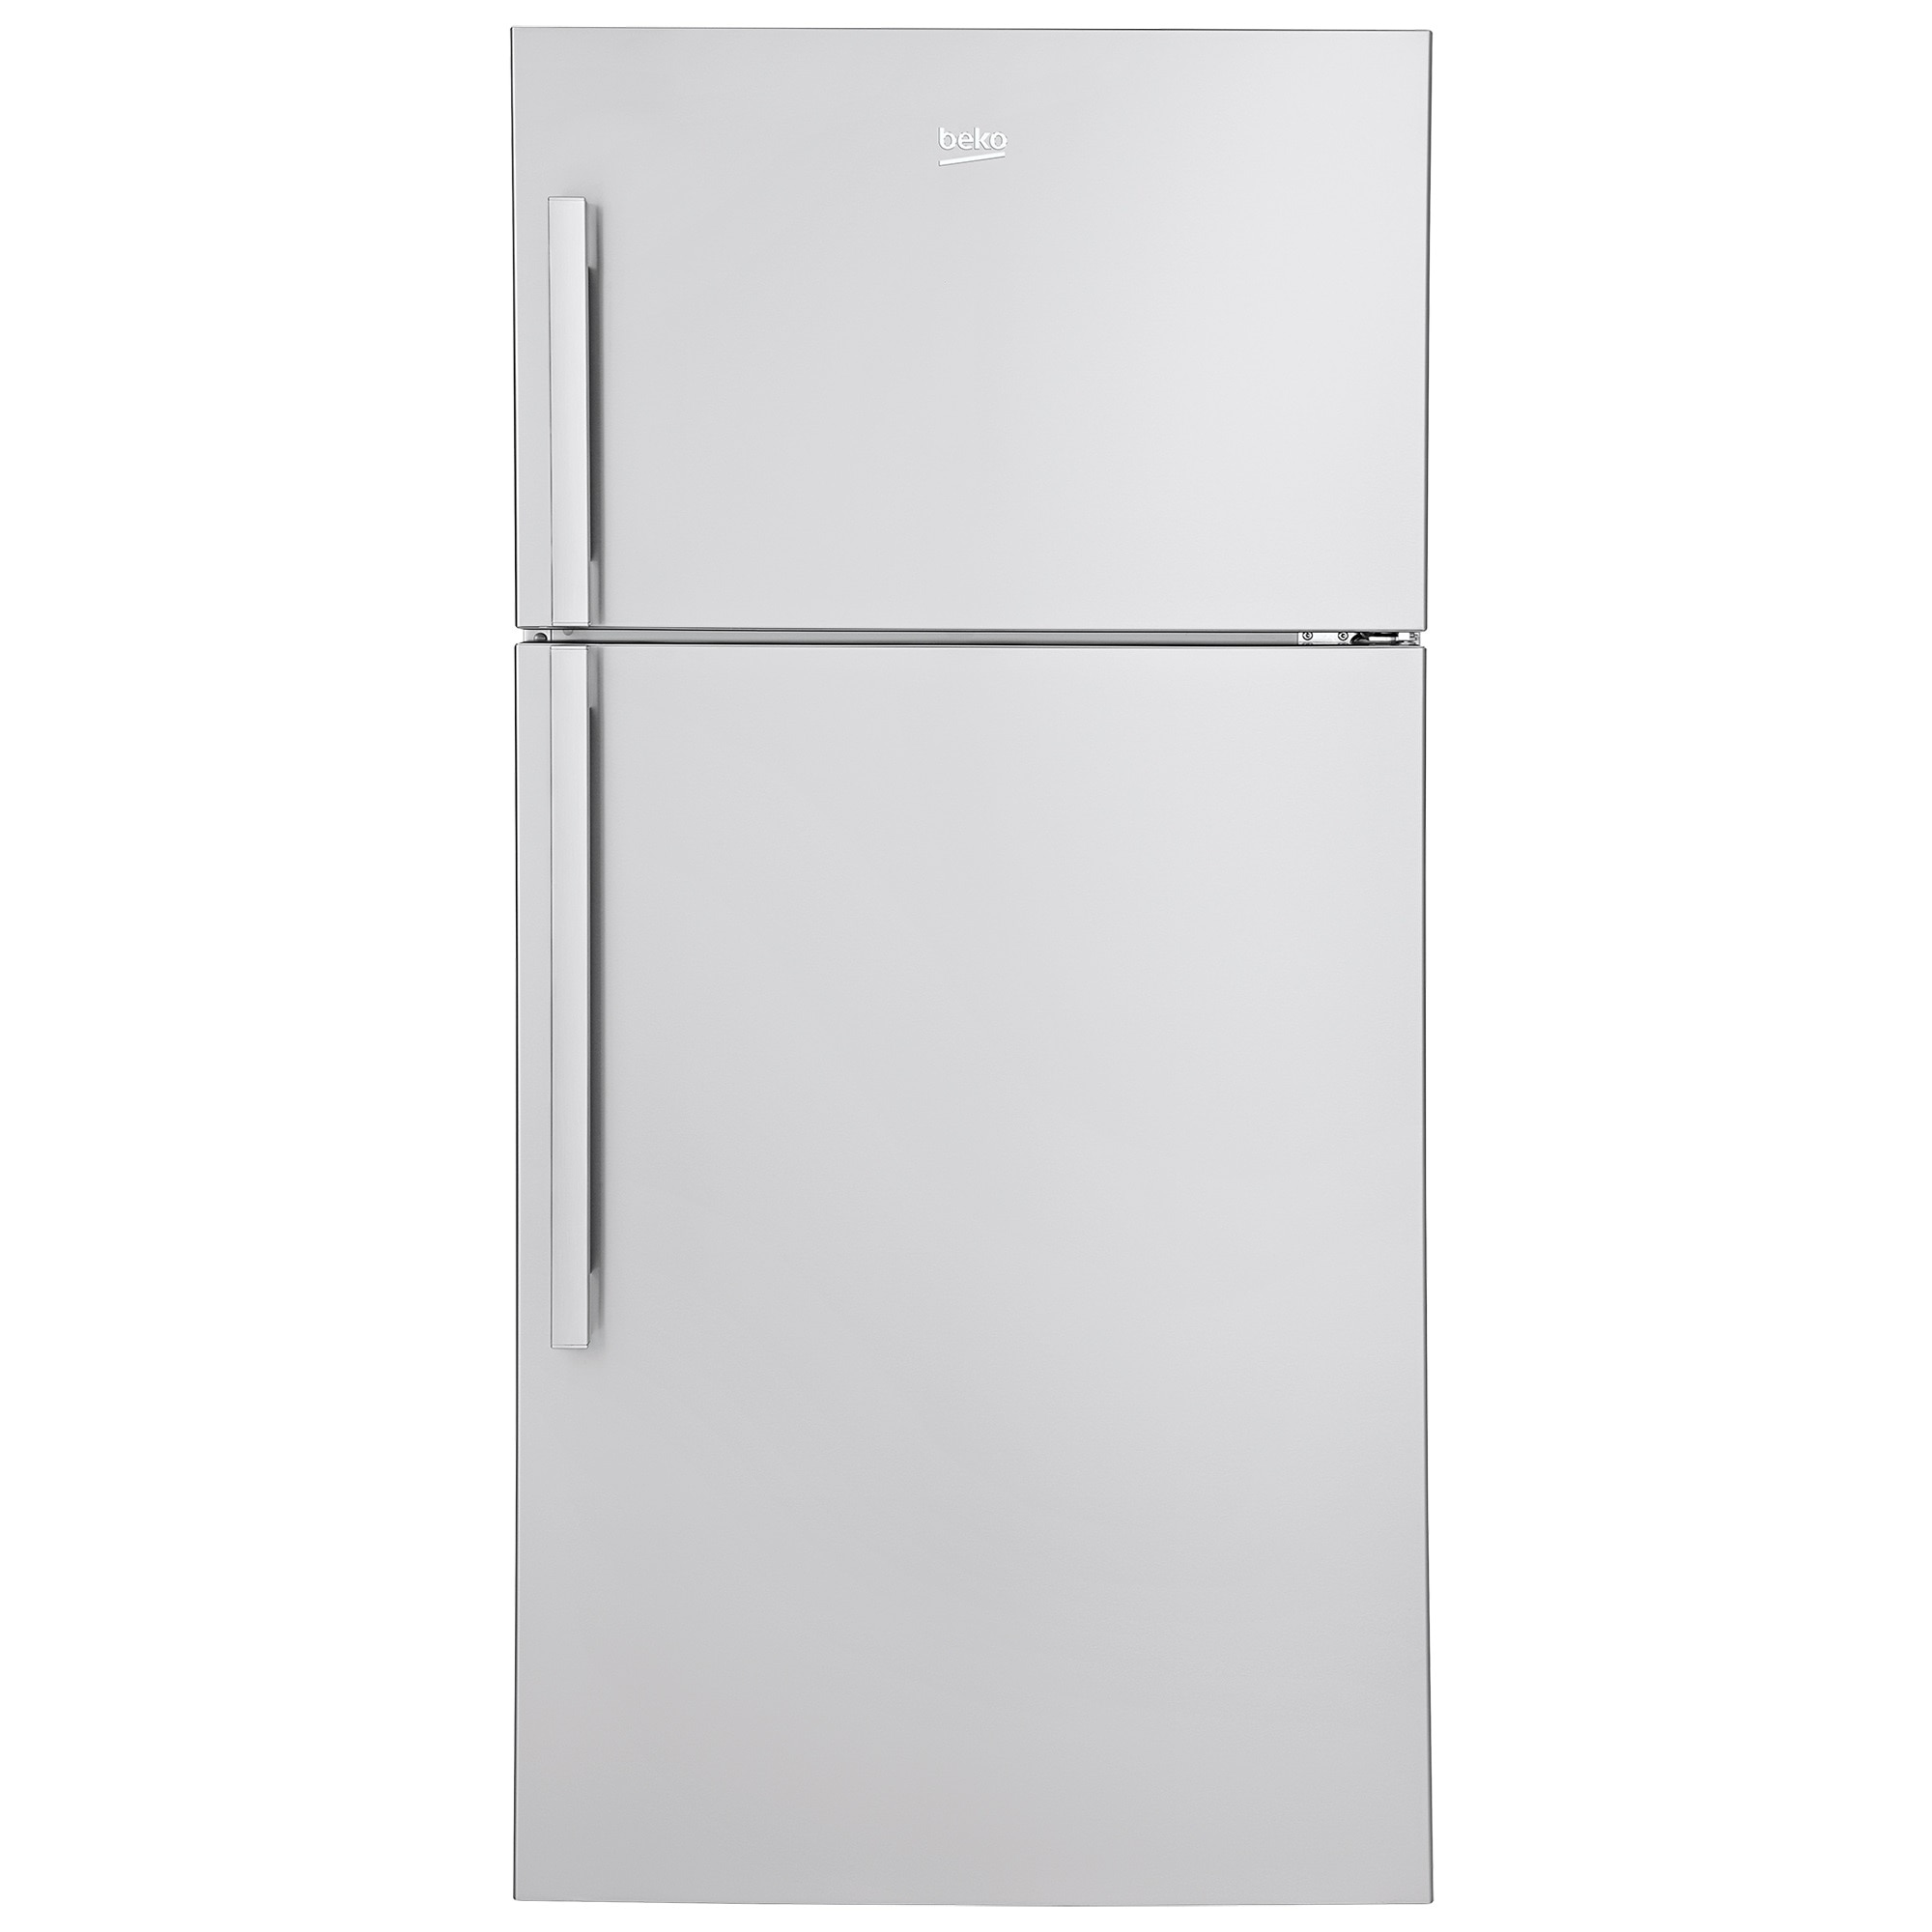 Хладилник Beko DN161220X с обем от 565 л.